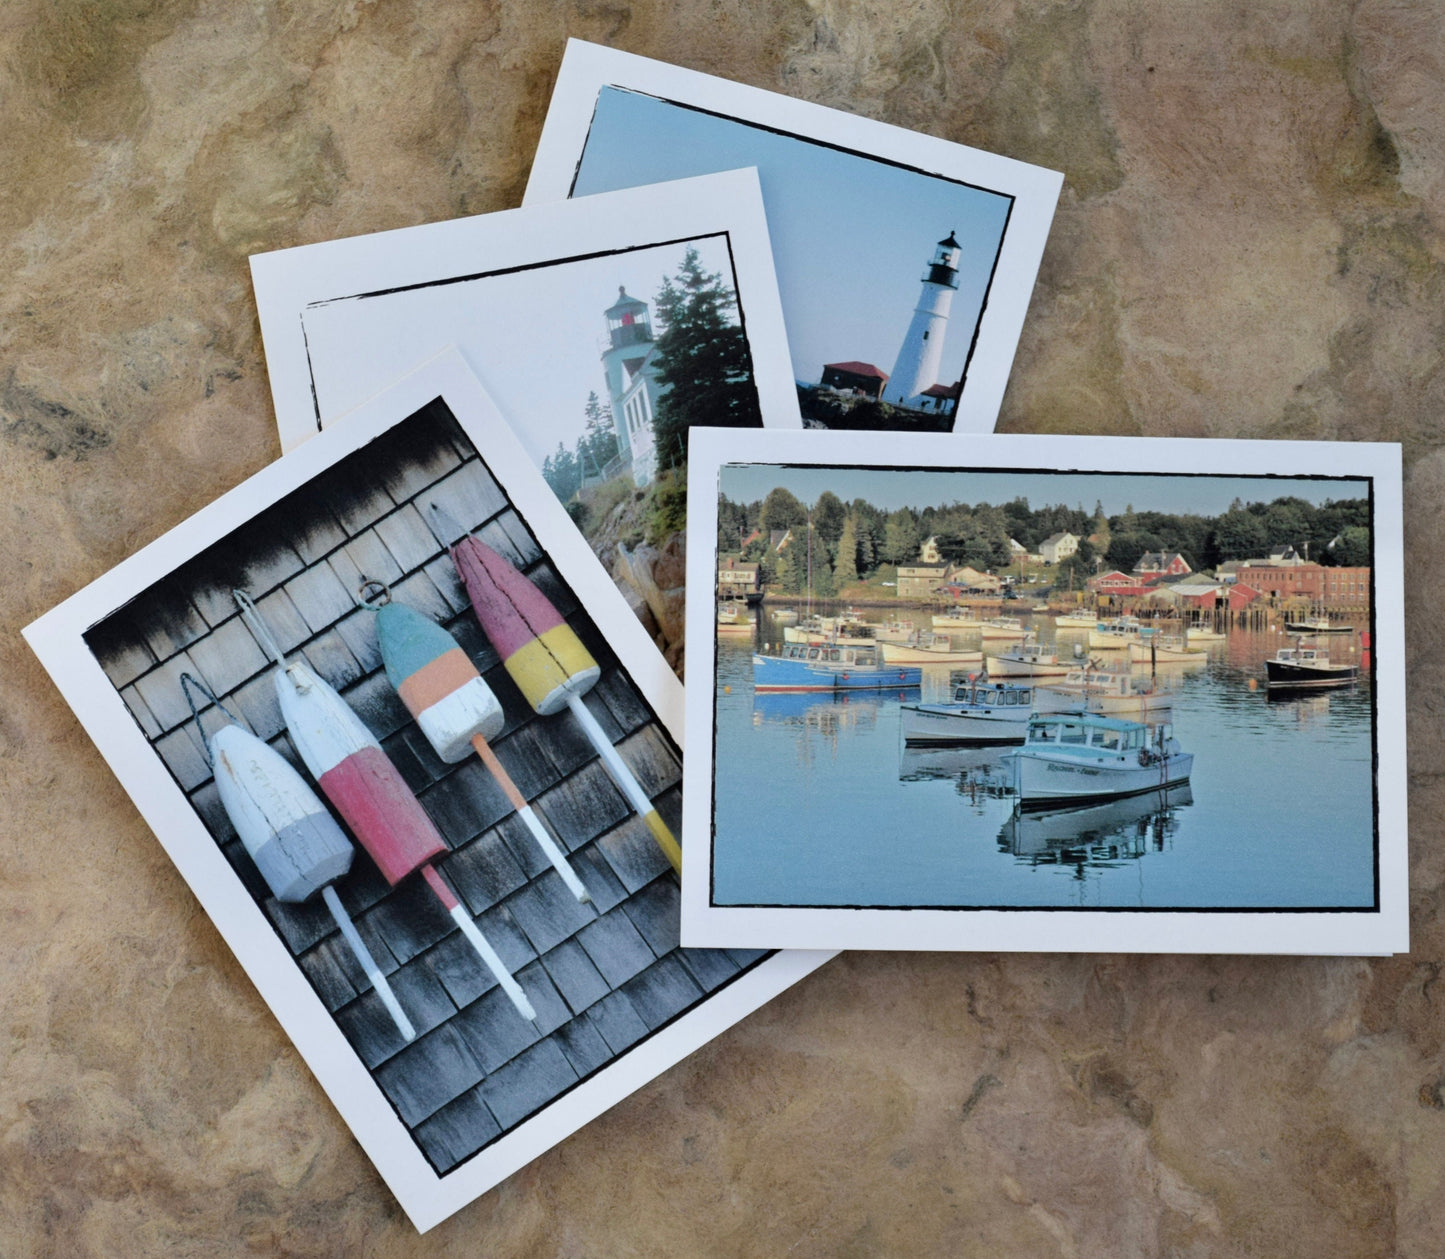 Maine Greeting Cards - Coastal Maine, Lighthouses, Lobster Buoy Cards